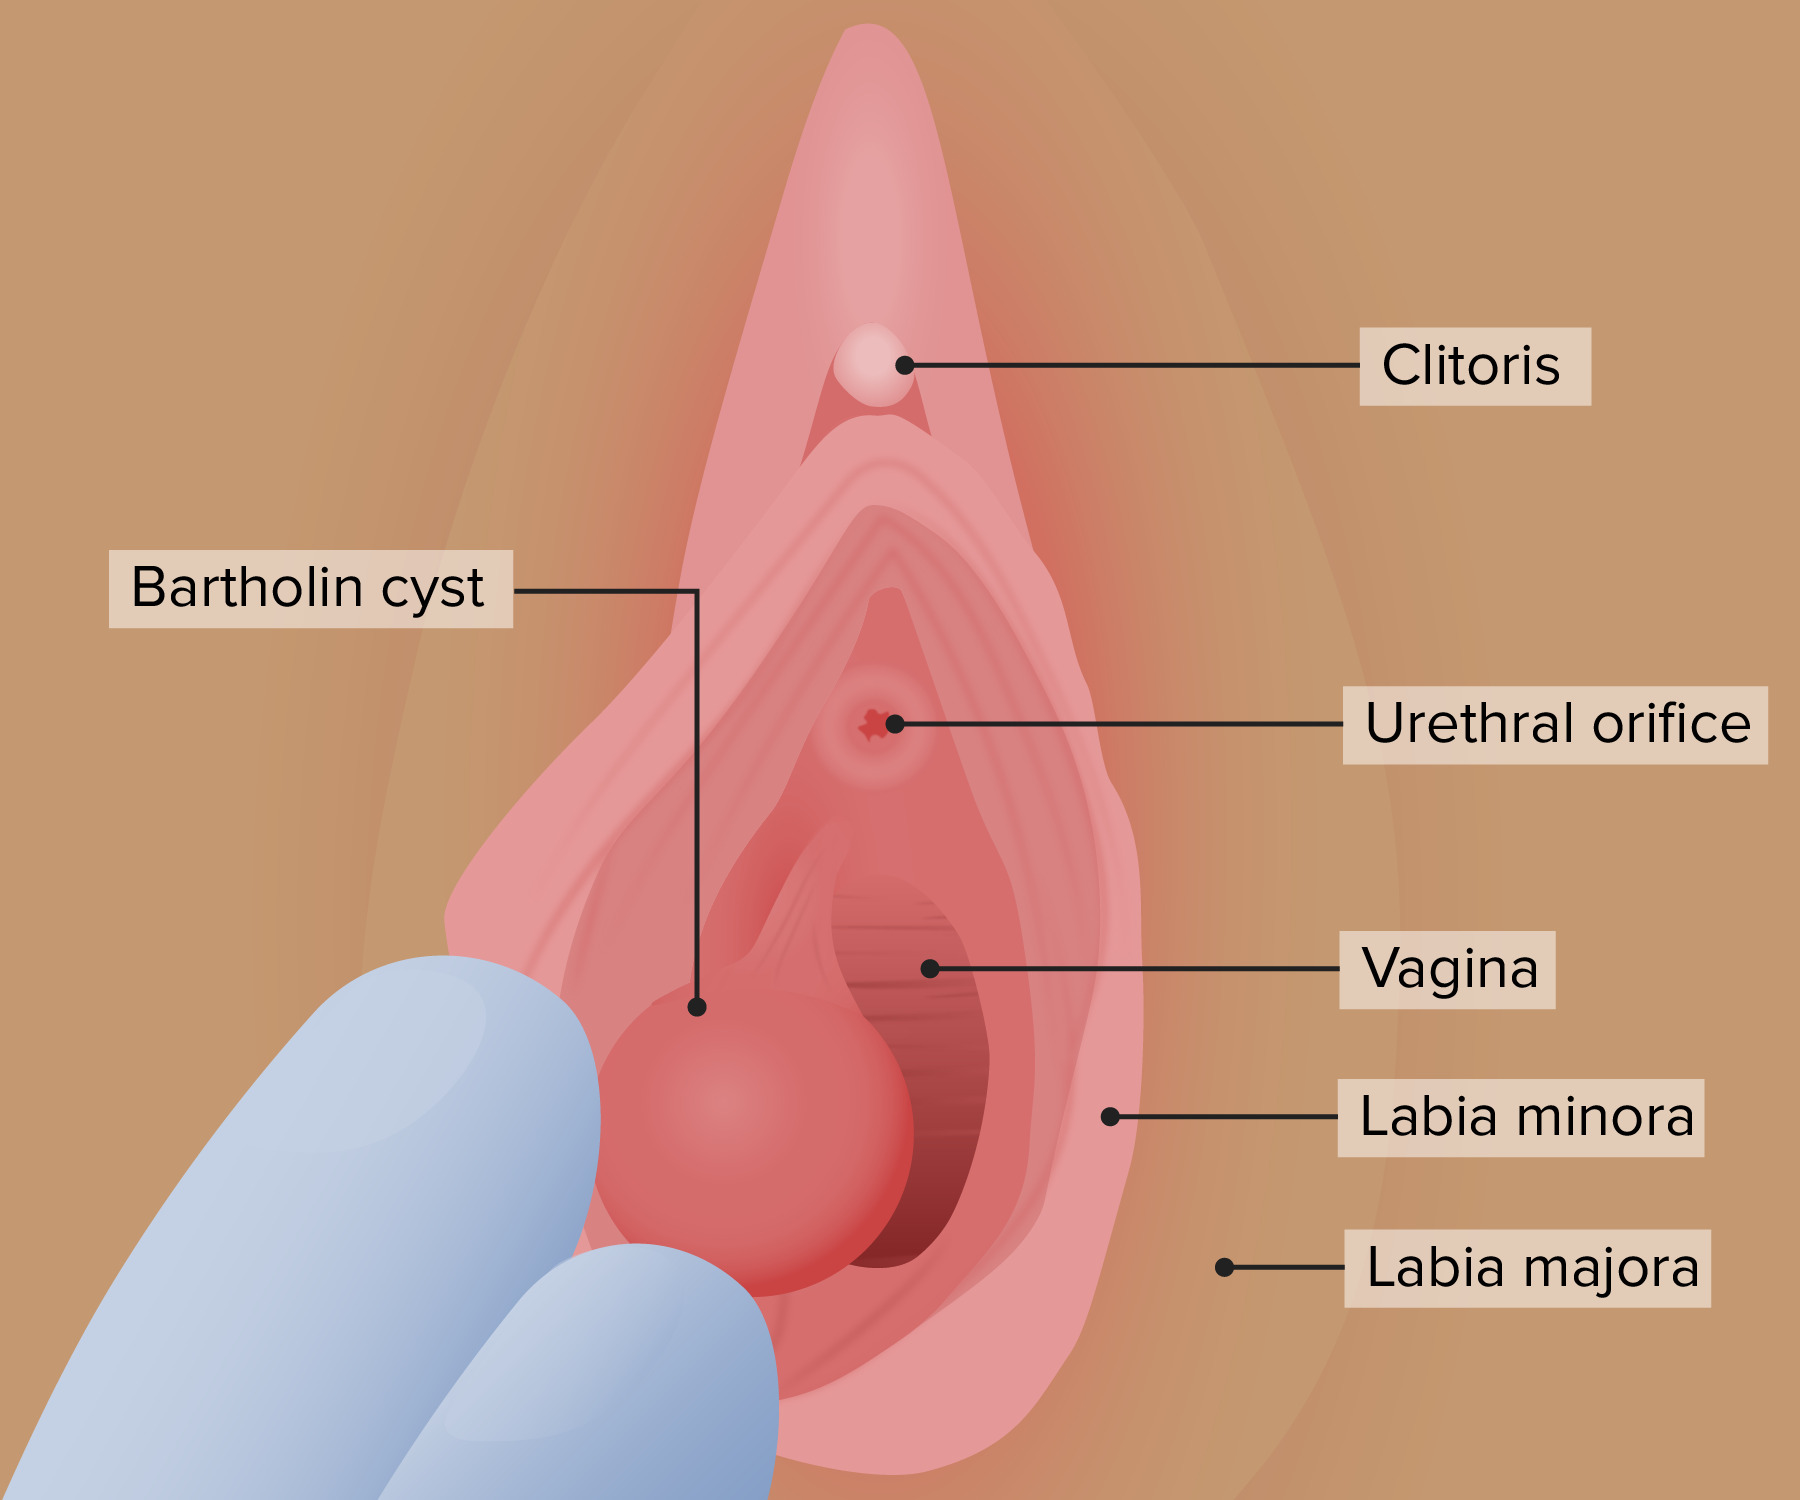 Bartholin cyst/abscess